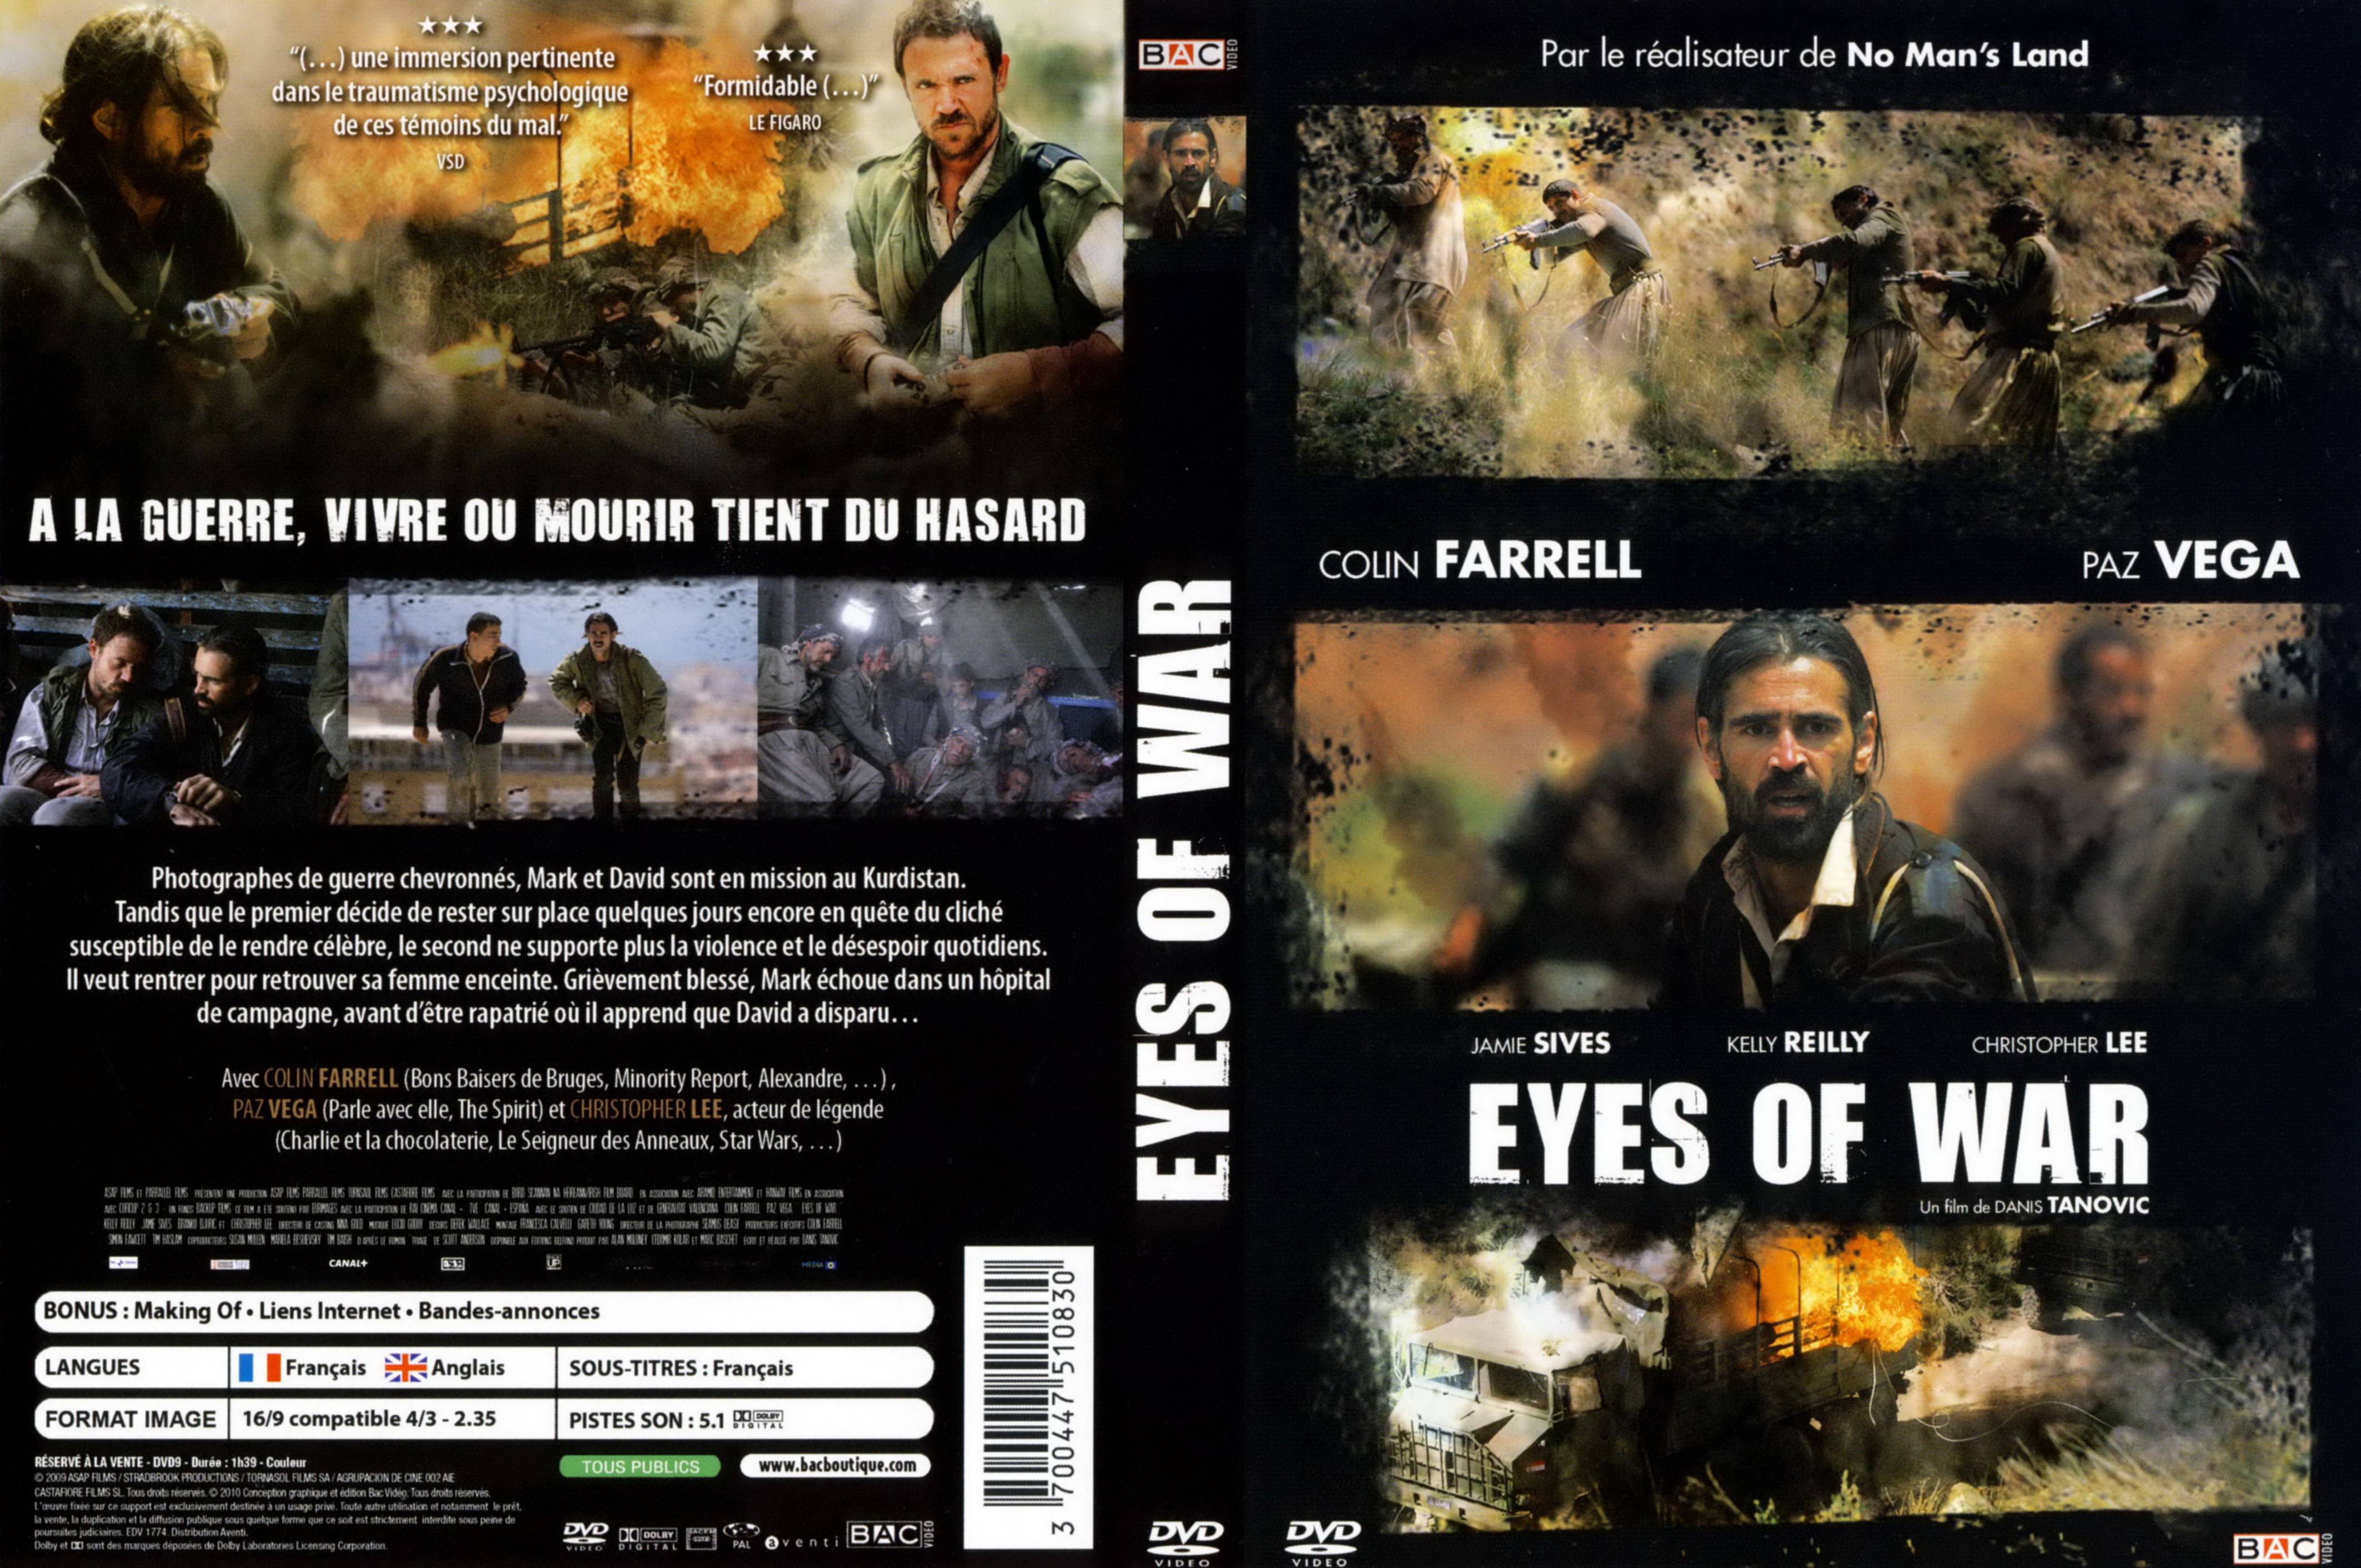 Jaquette DVD Eyes of war